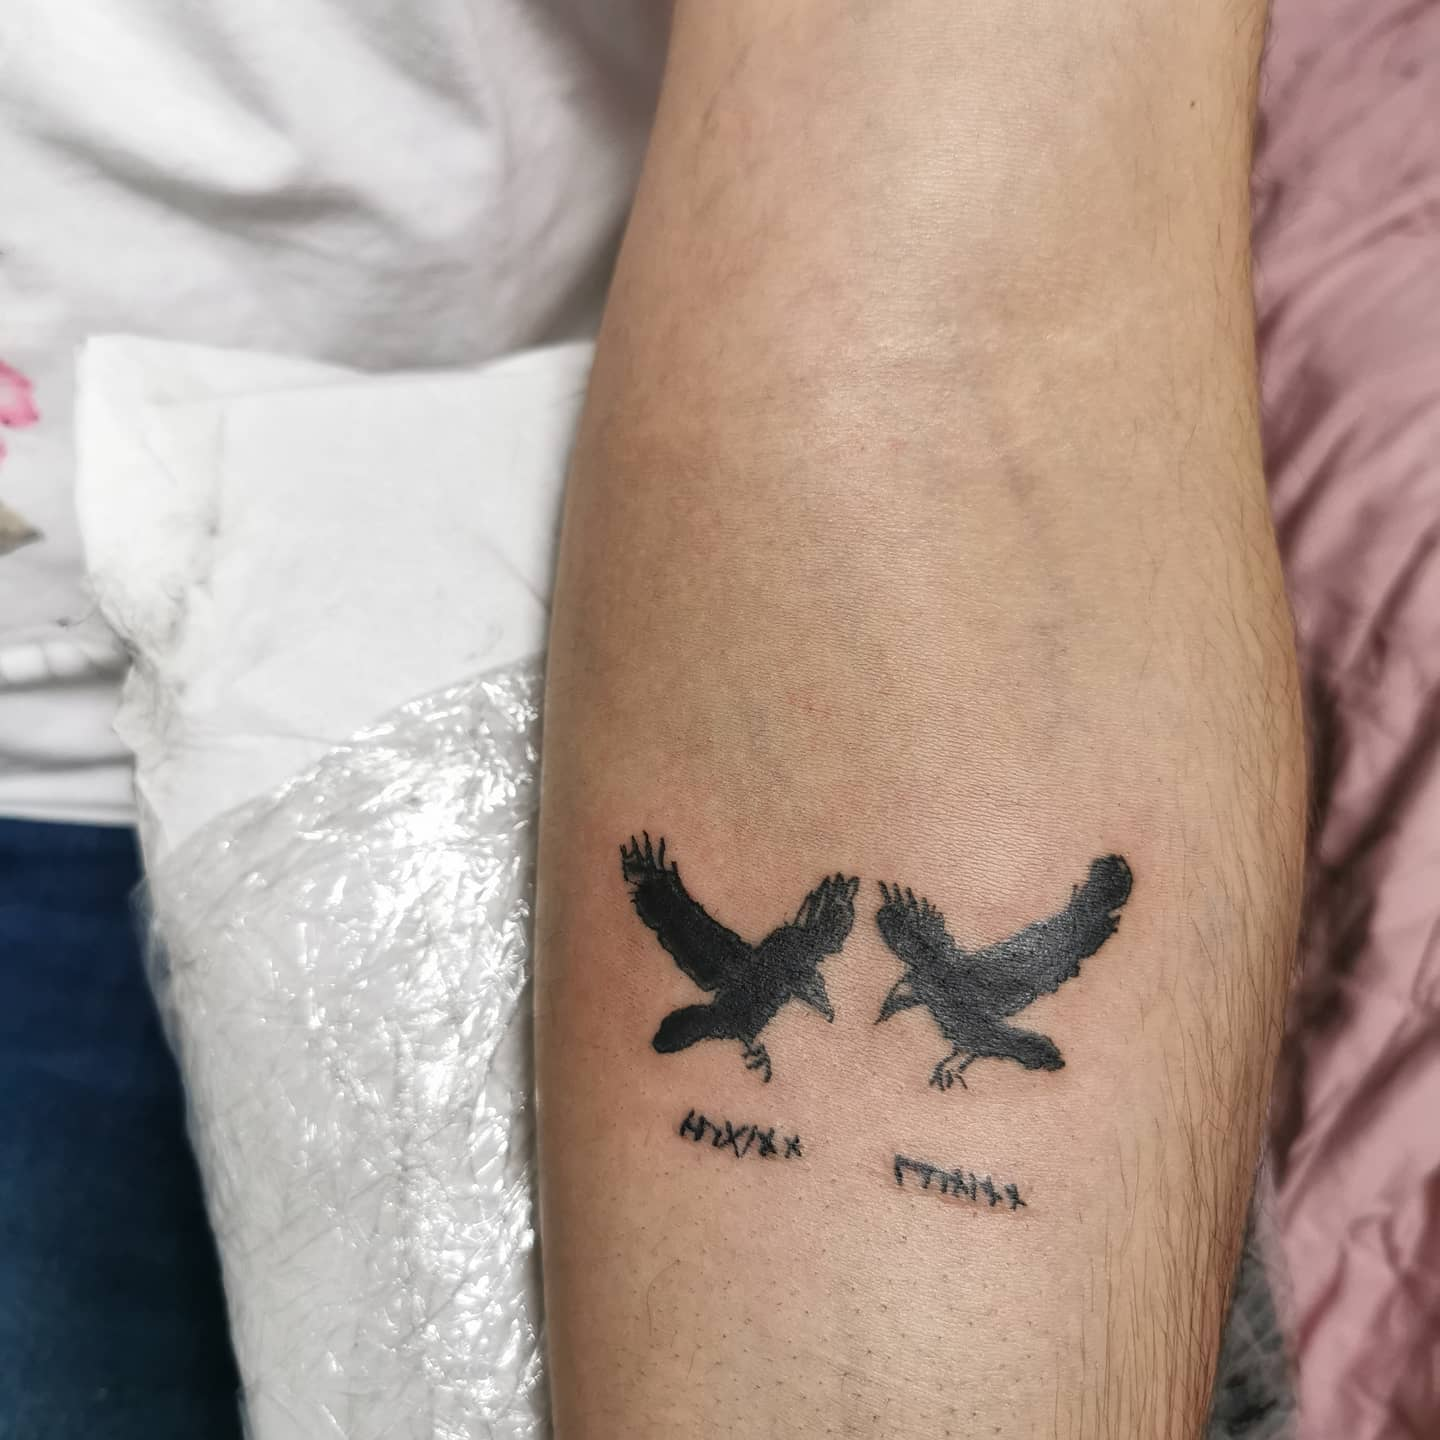 Sketch Tattoos  Wrist tattoos for guys Polish tattoos Tattoos